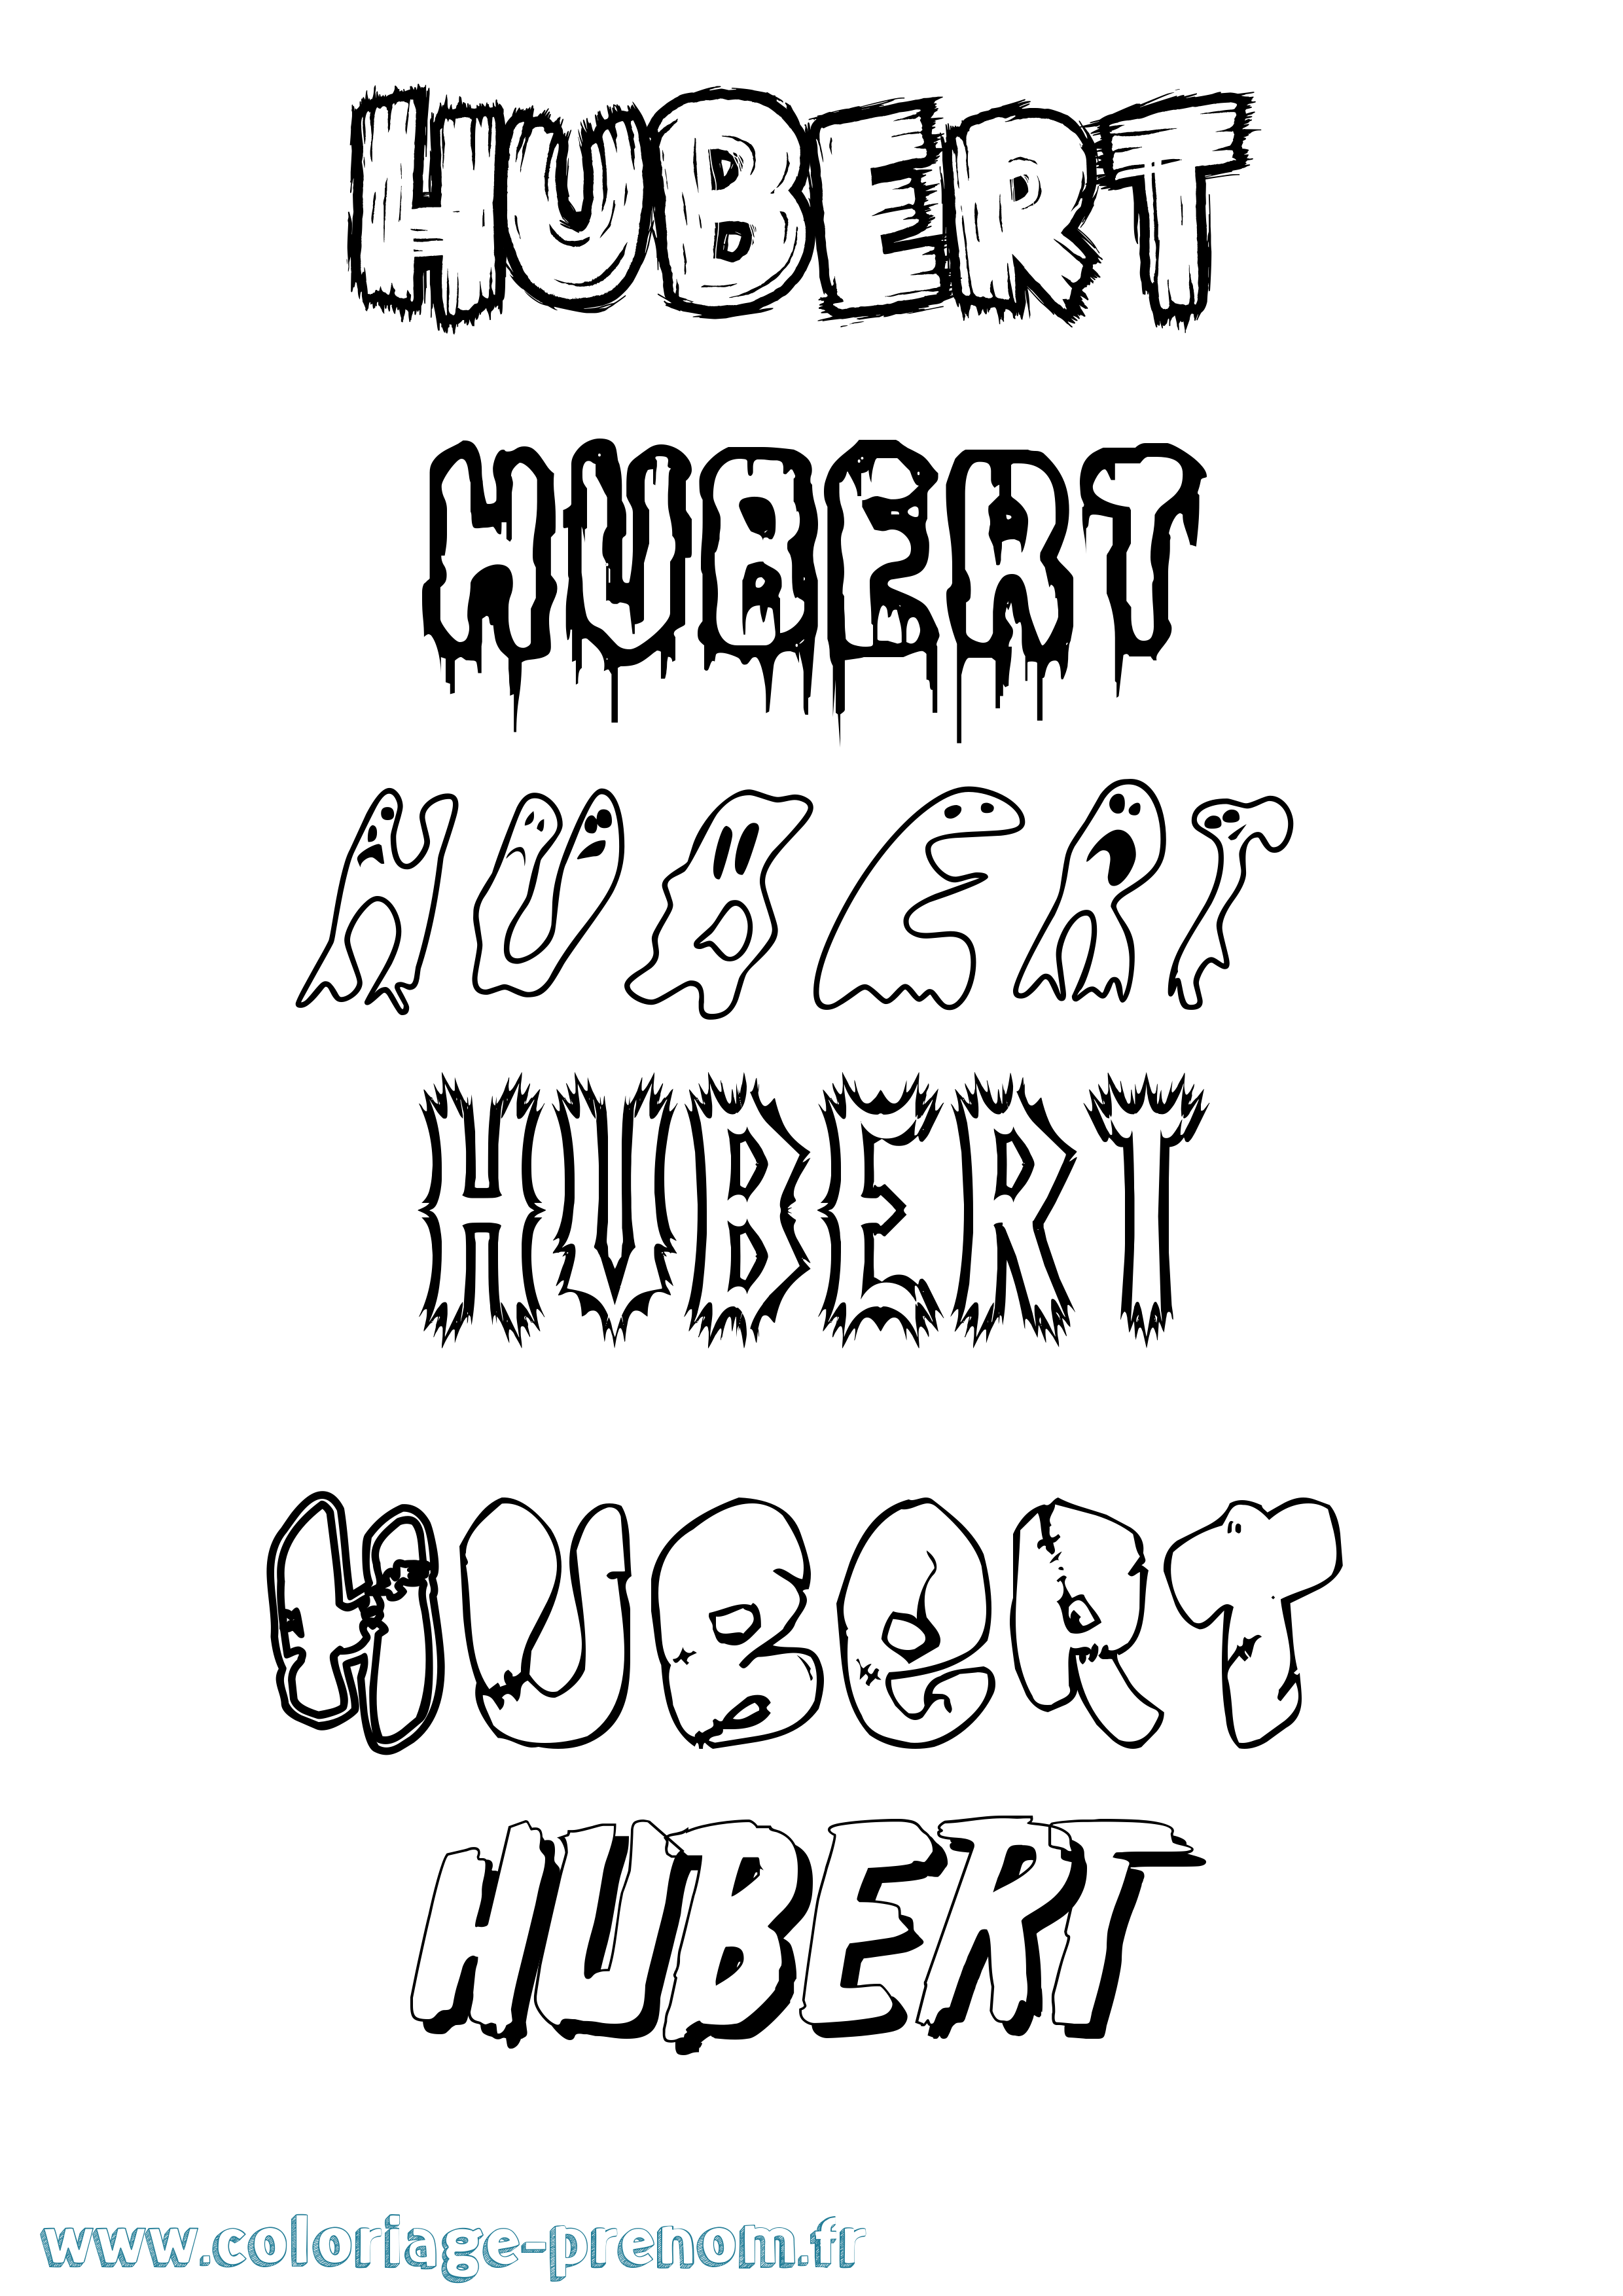 Coloriage prénom Hubert Frisson